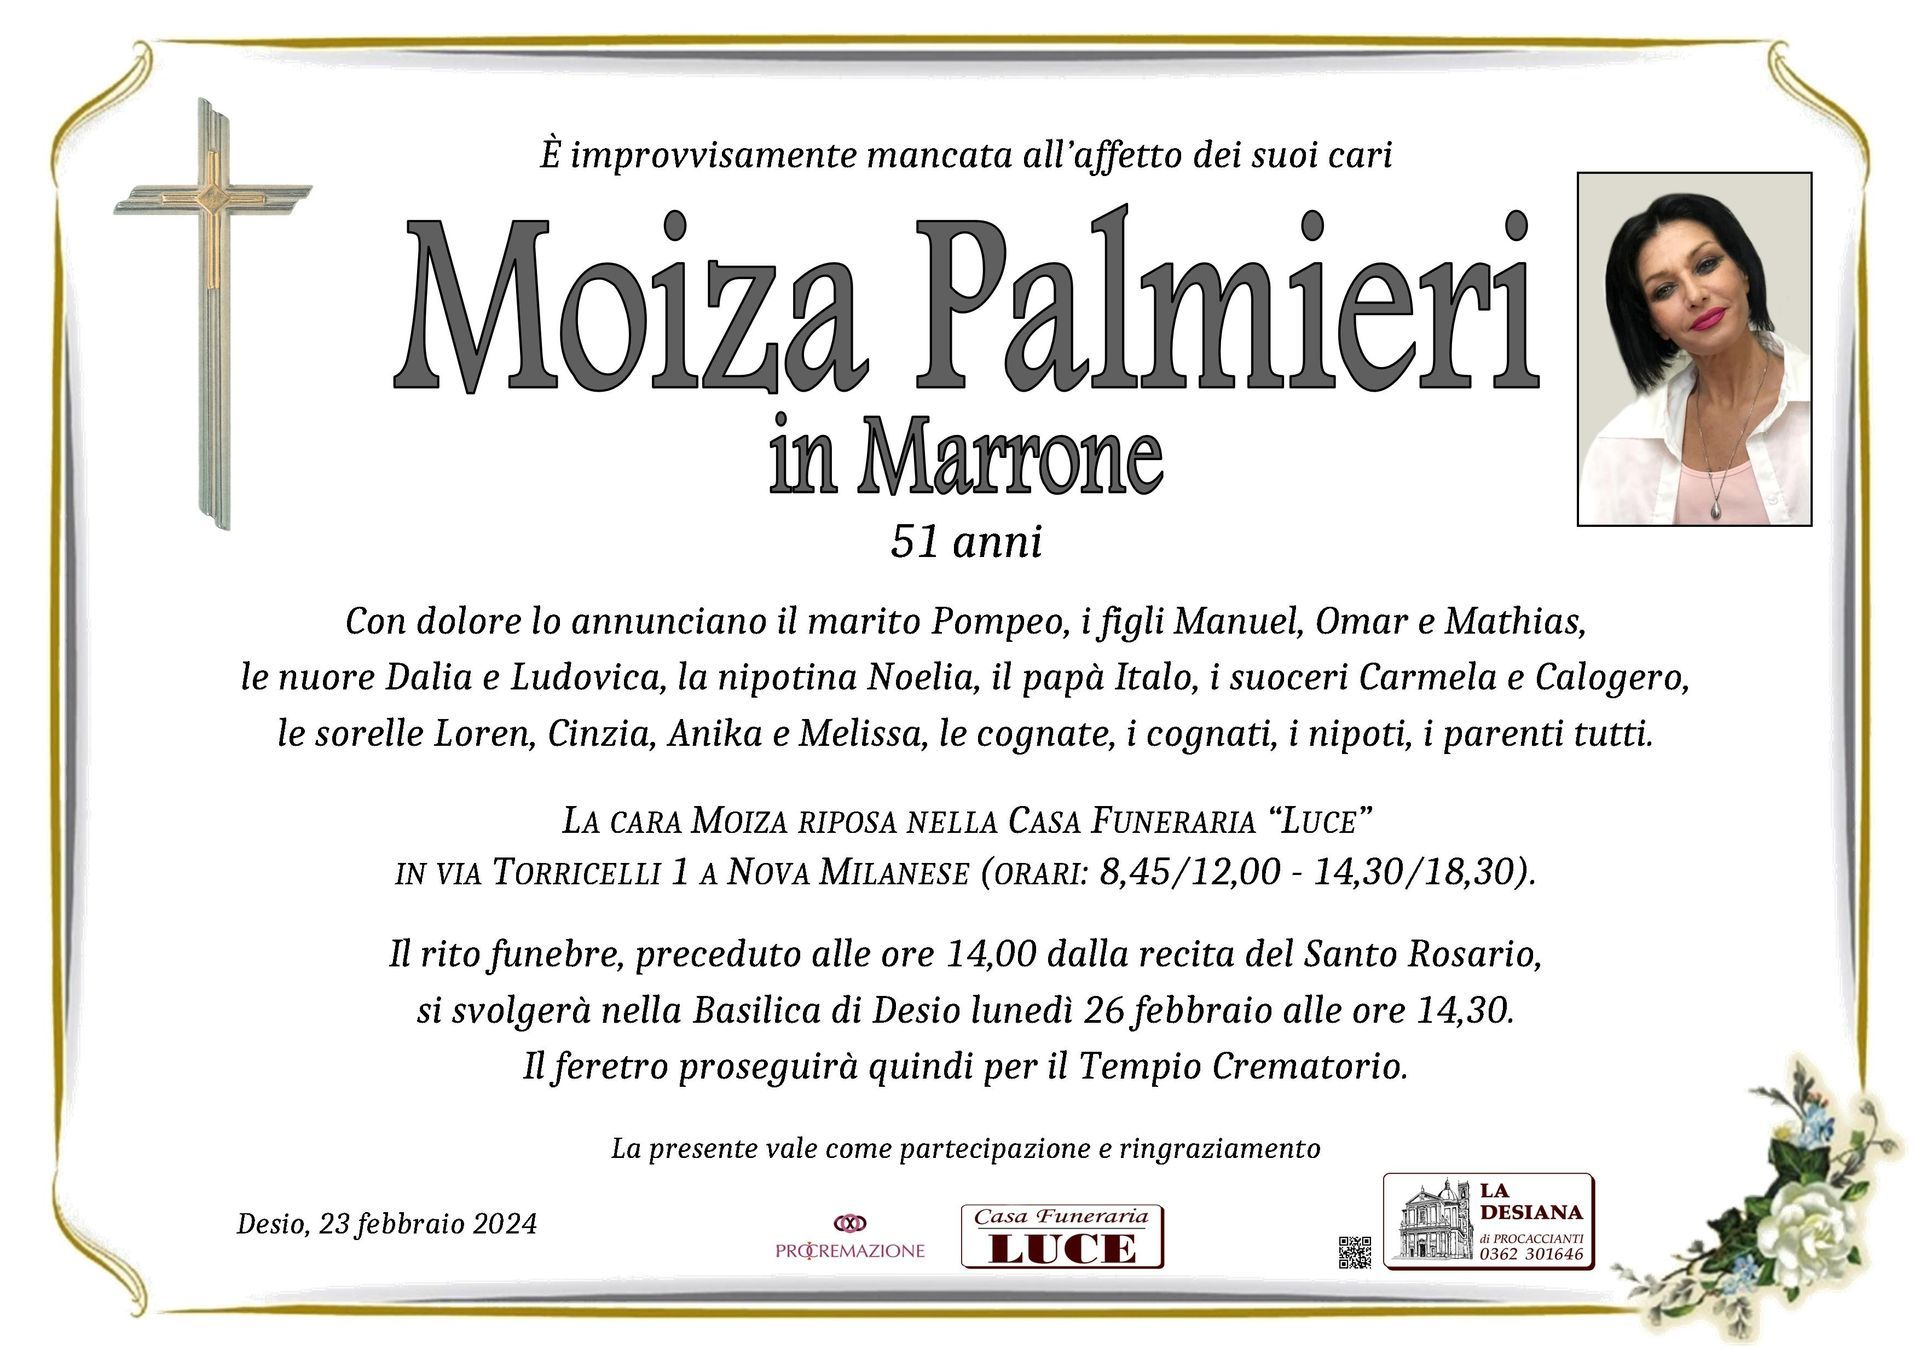 Moiza Palmieri in Marrone